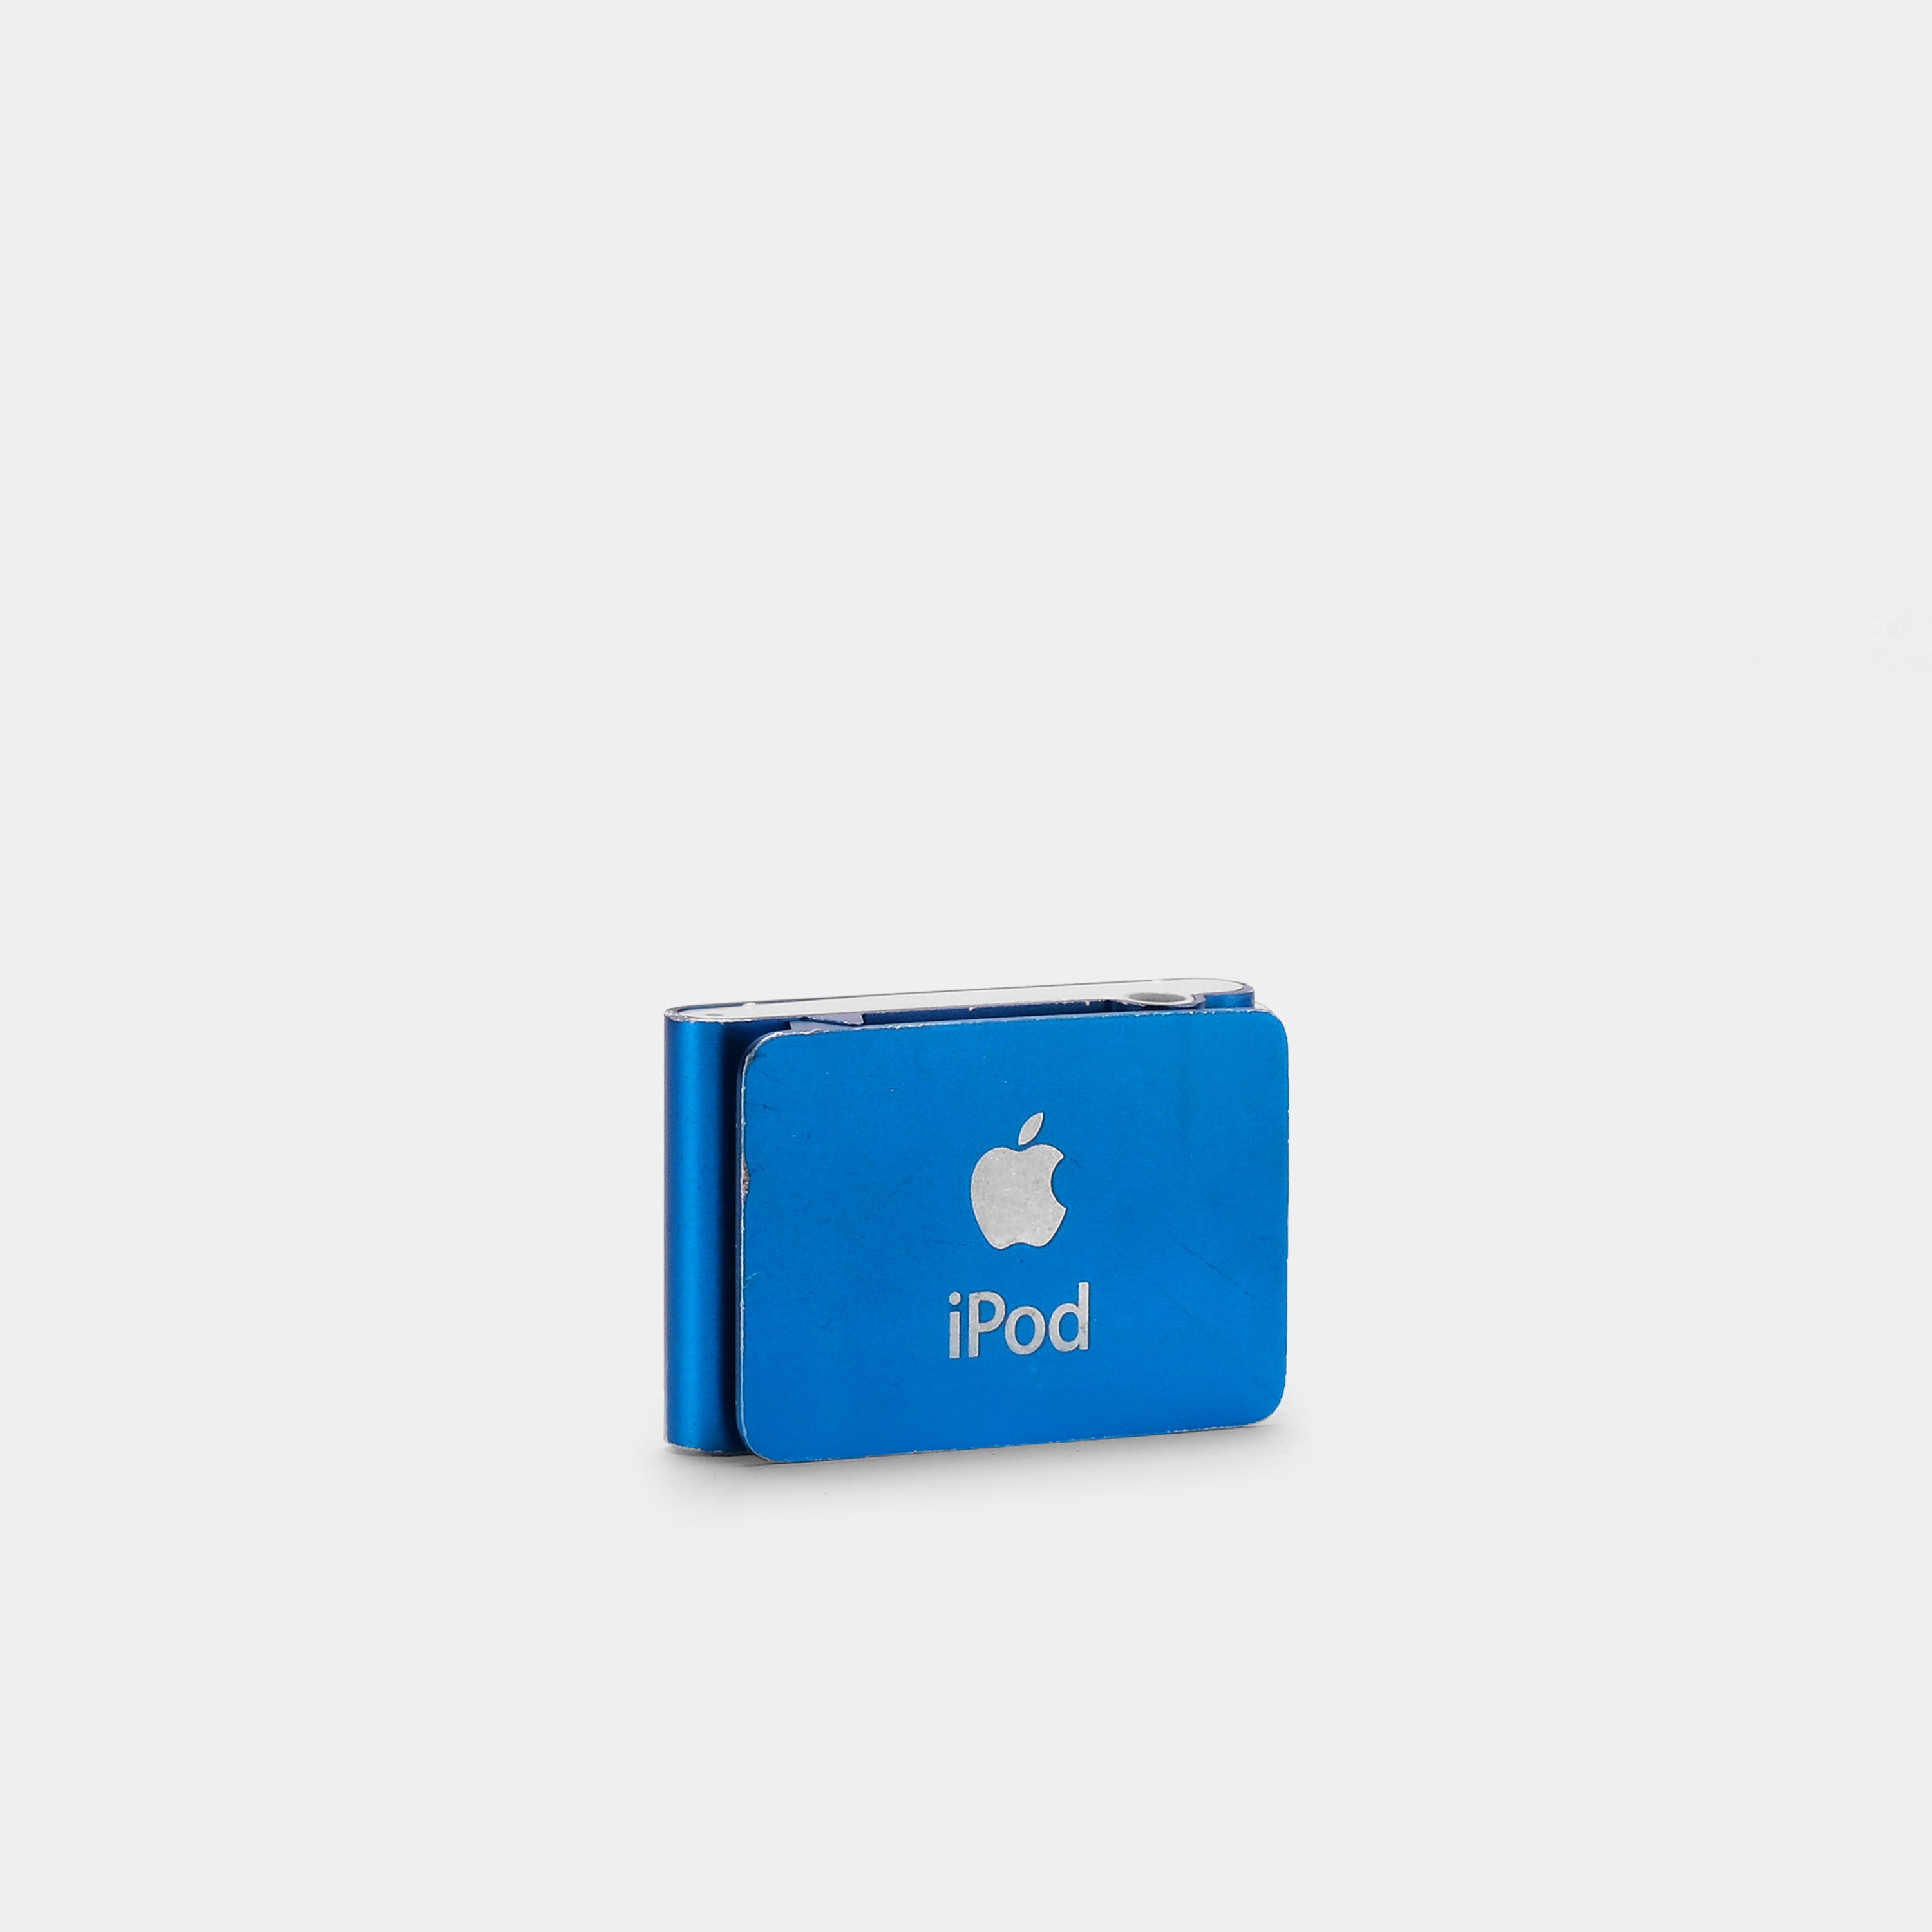 Apple iPod Shuffle (2nd Generation) 2GB MP3 Player